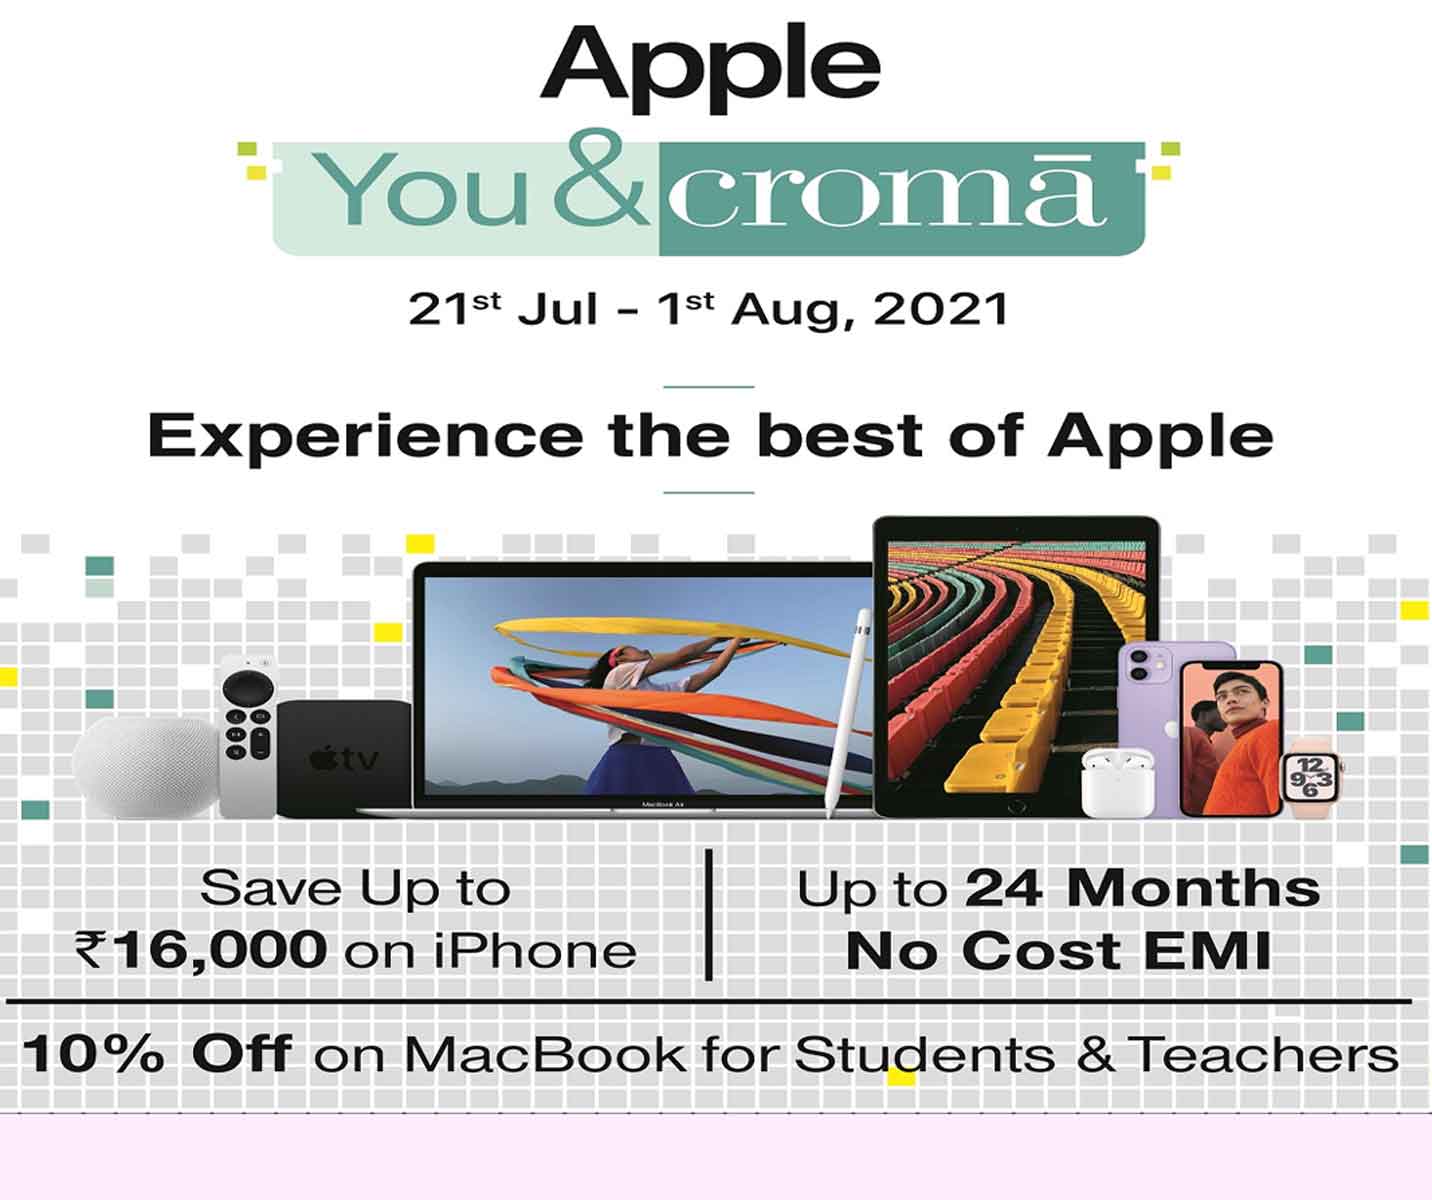 Apple-You-&-Croma